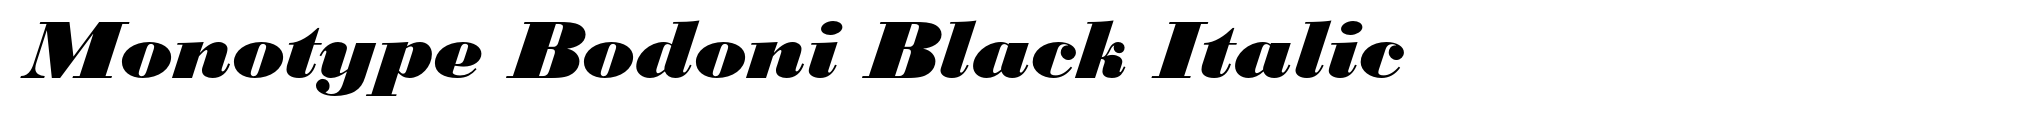 Monotype Bodoni Black Italic image